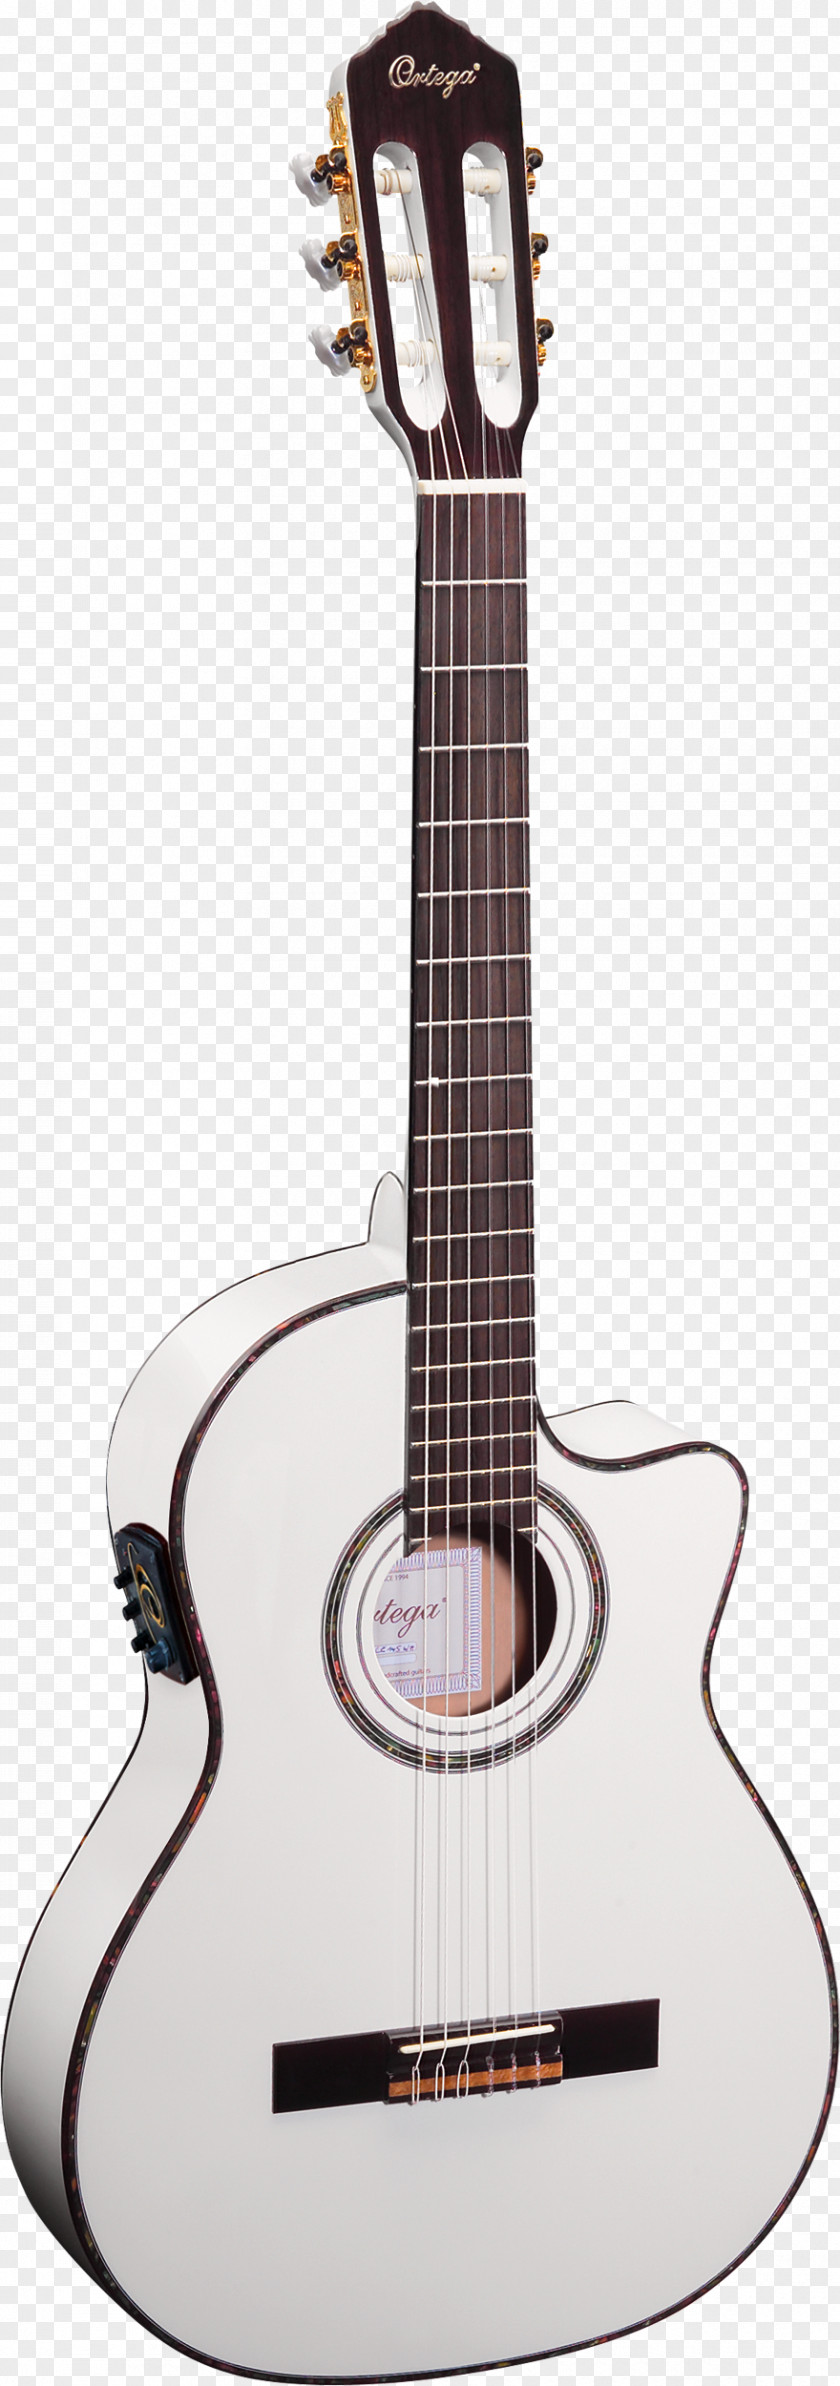 Amancio Ortega Steel-string Acoustic Guitar Musical Instruments Classical PNG